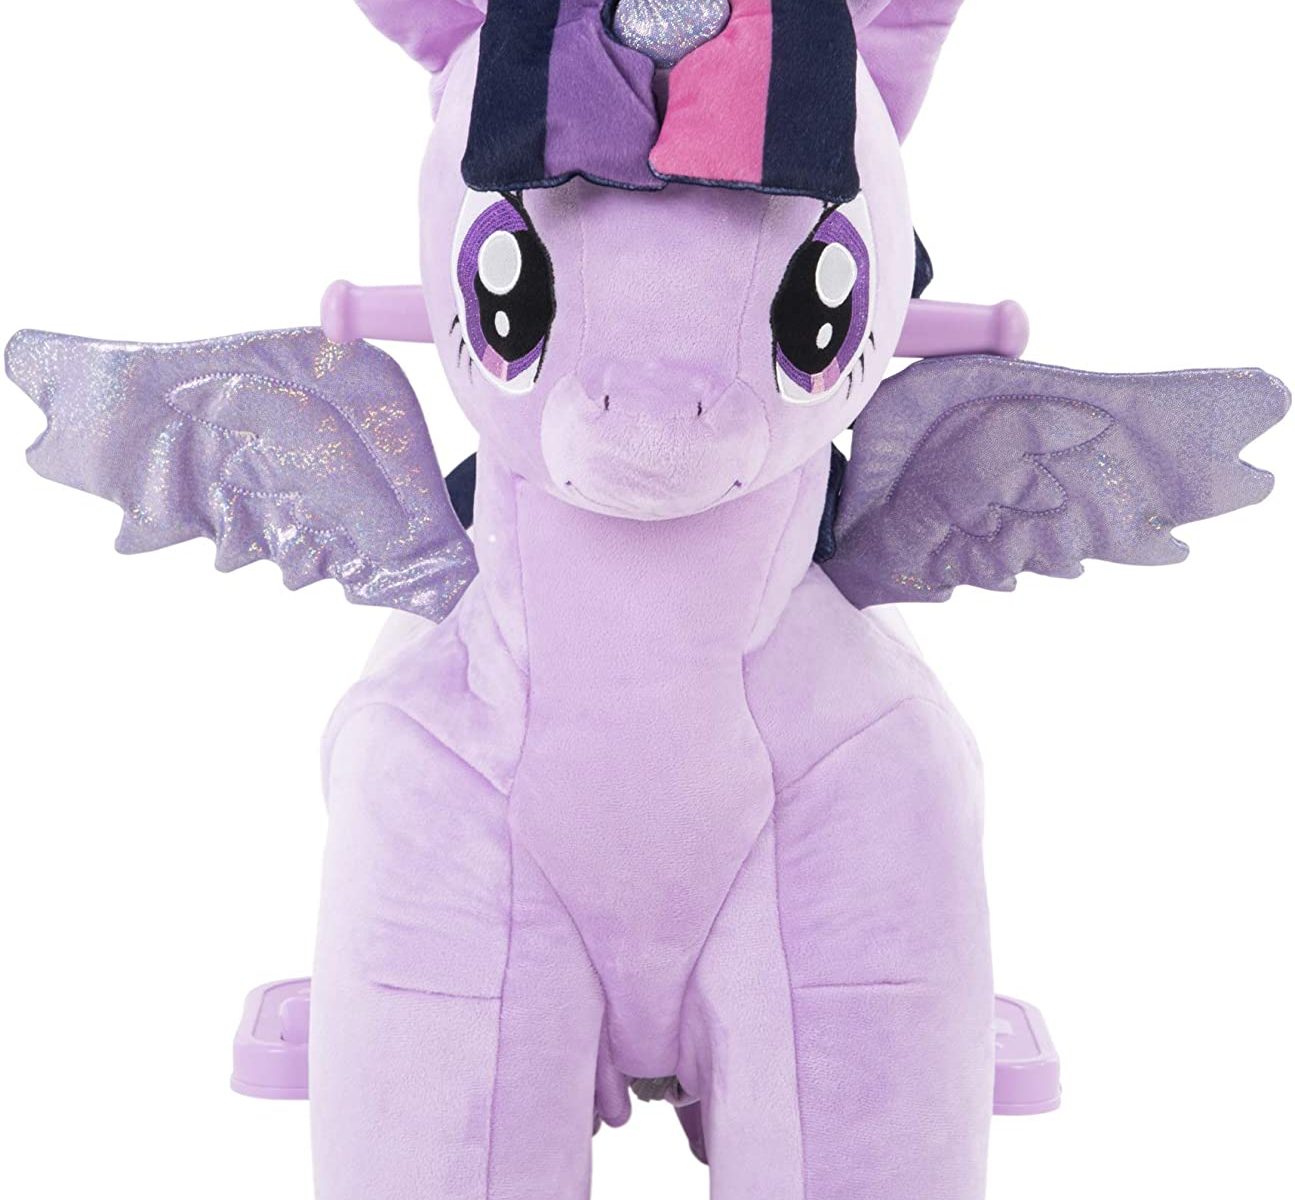 MLP Princess Twilight Sparkle Plush Quad Toy 1